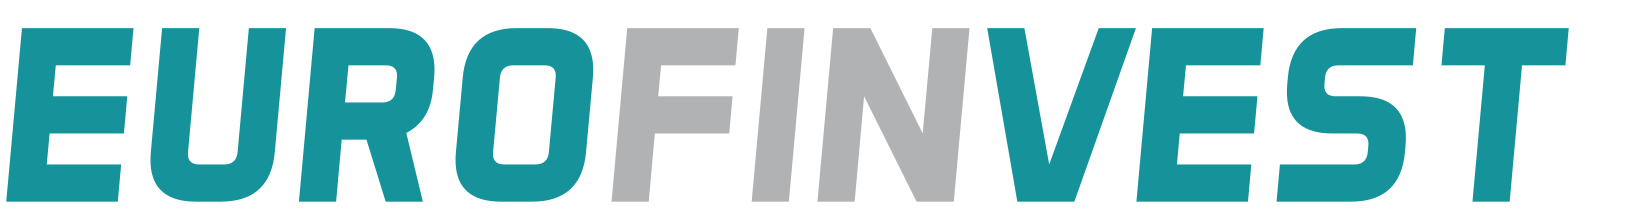 EUROFINVEST logo